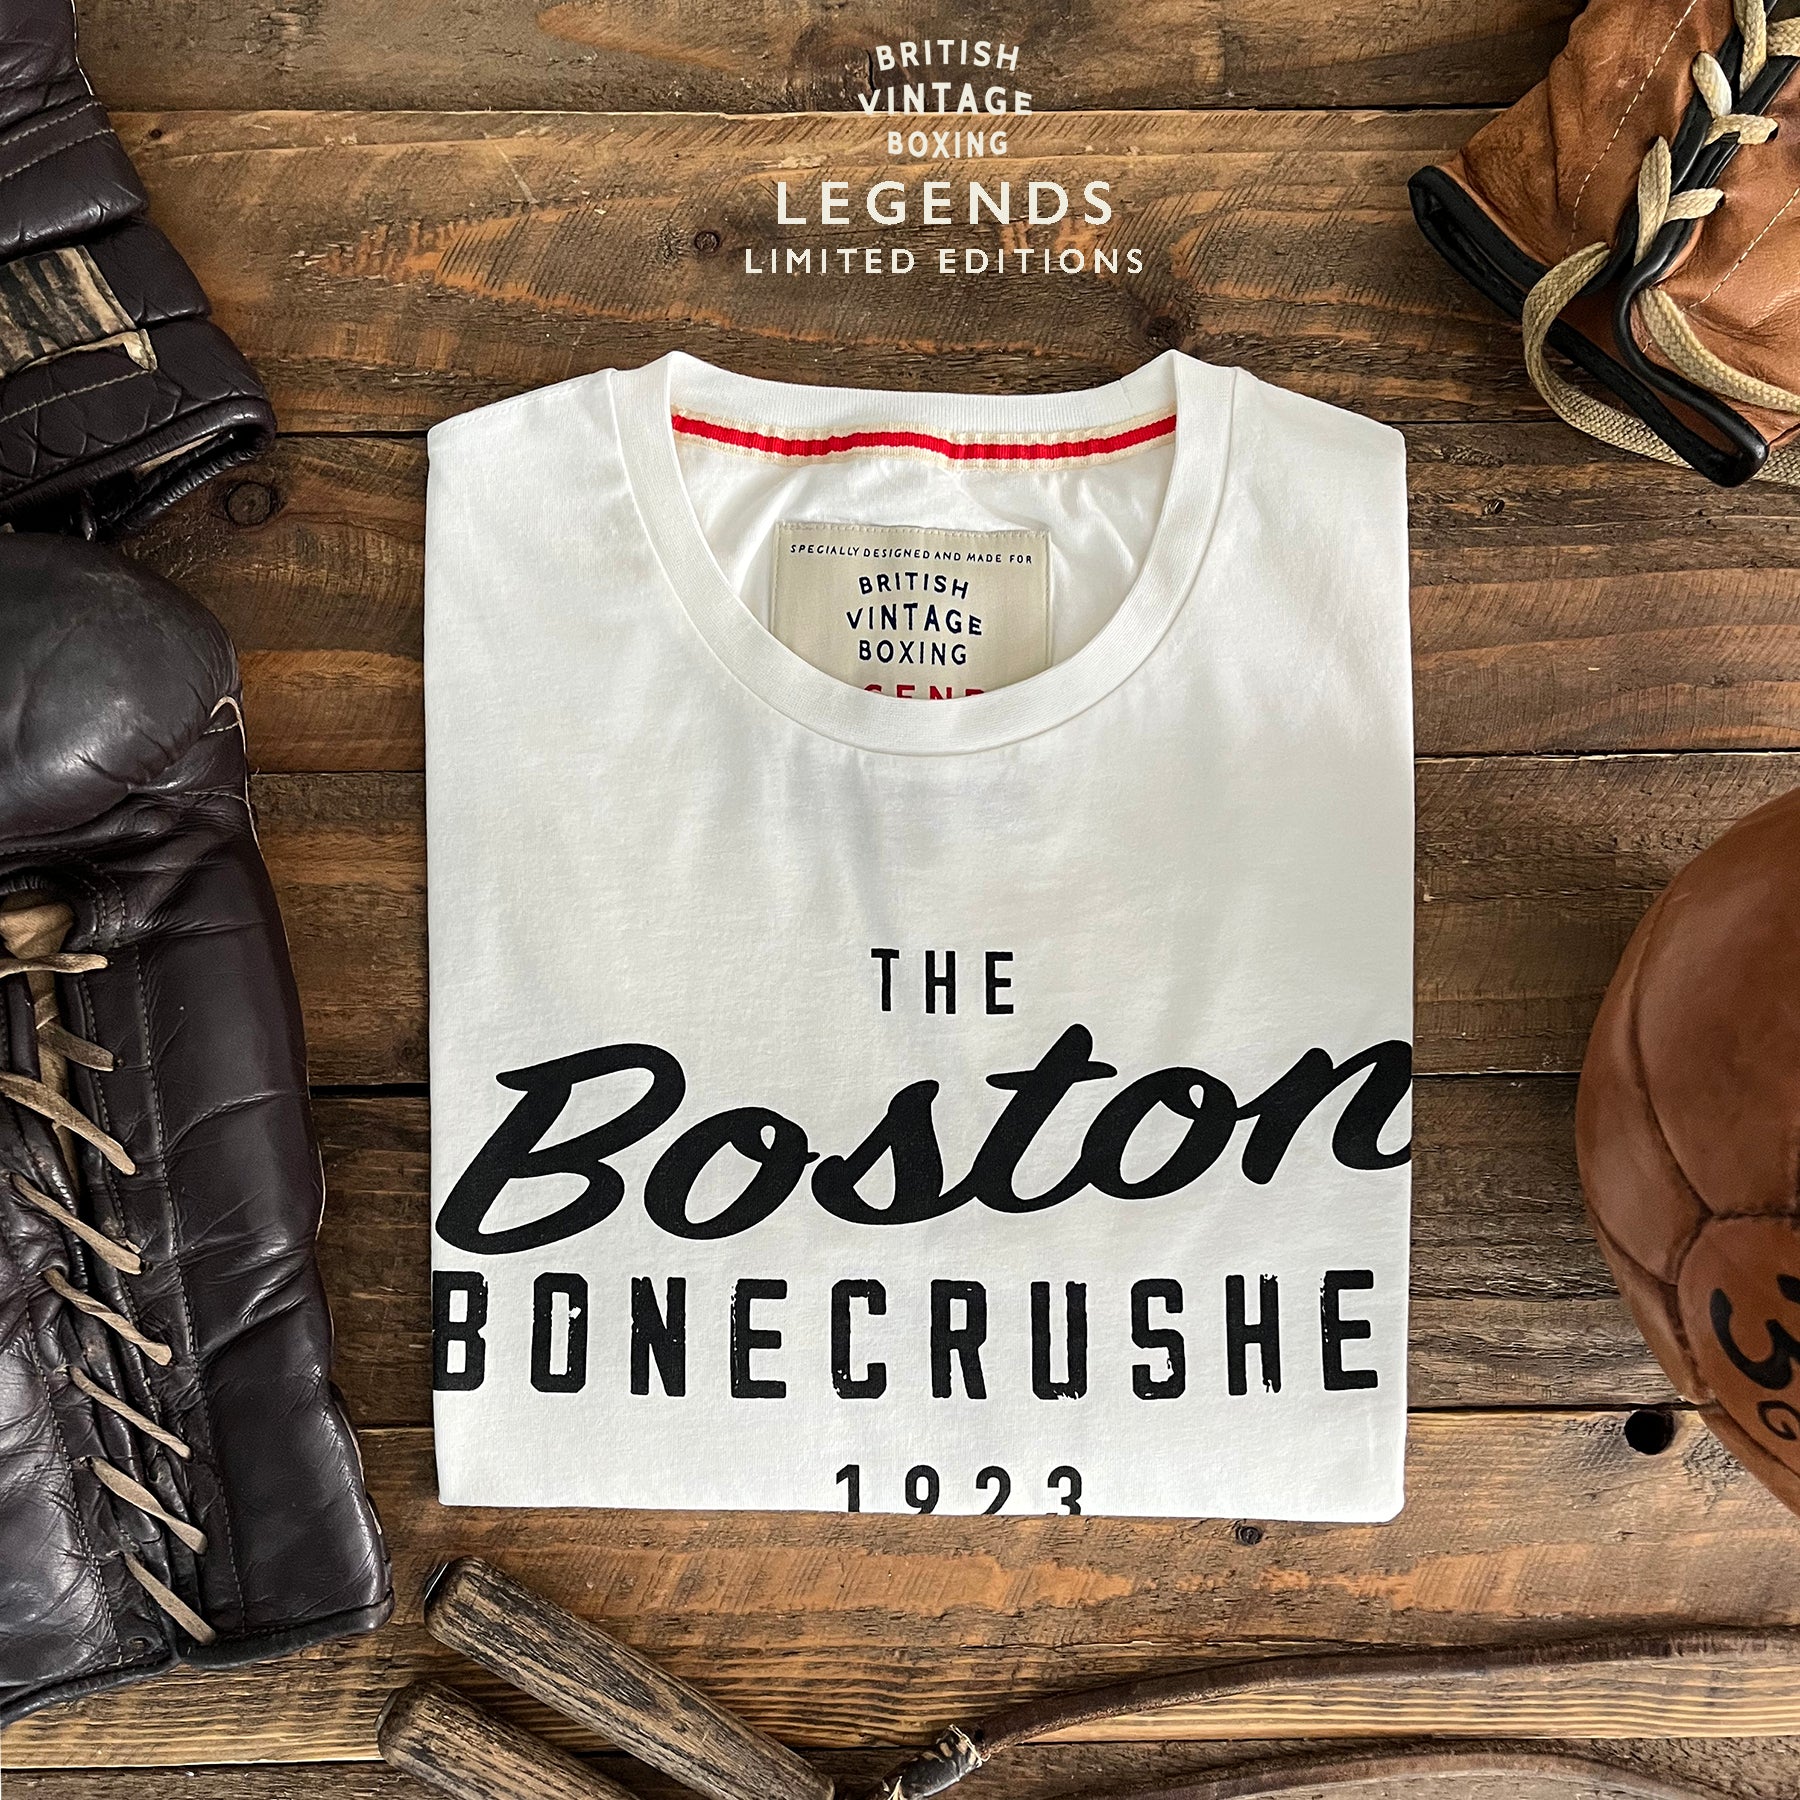 THE BOSTON BONECRUSHER T-SHIRT